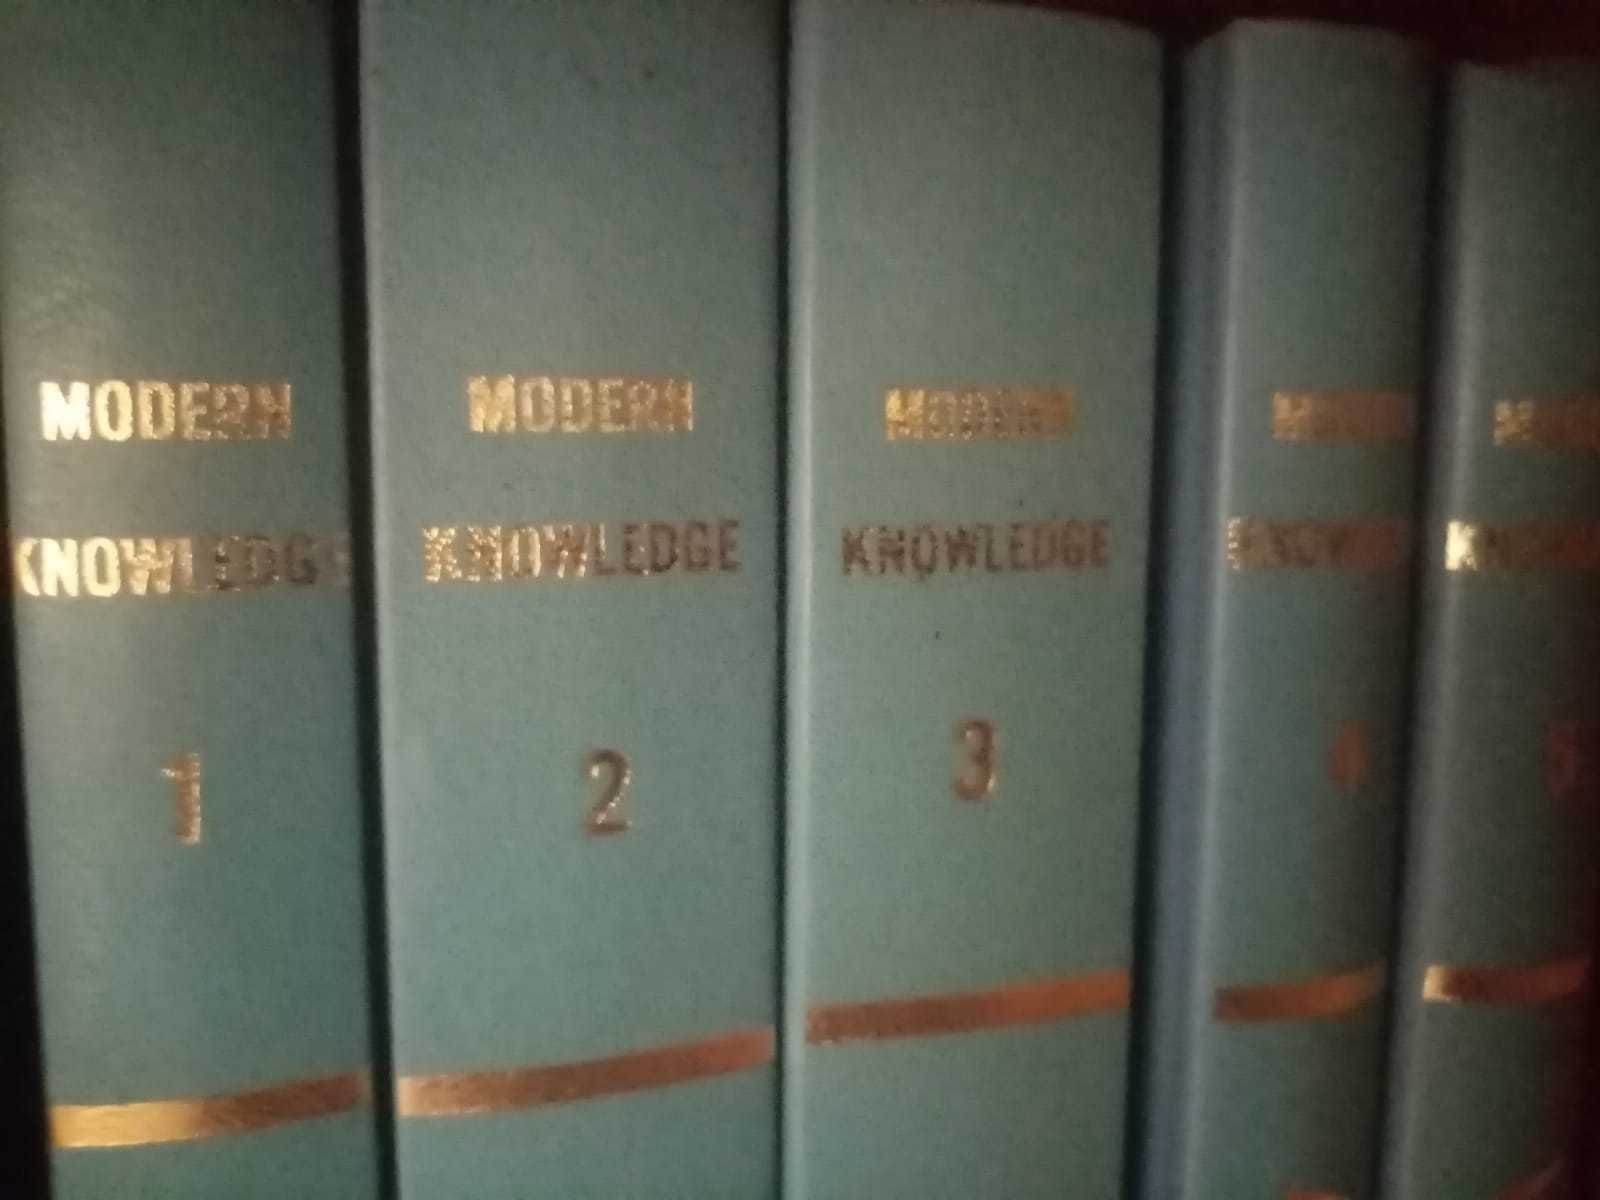 livros: “Modern knowledge” (cinco volumes)